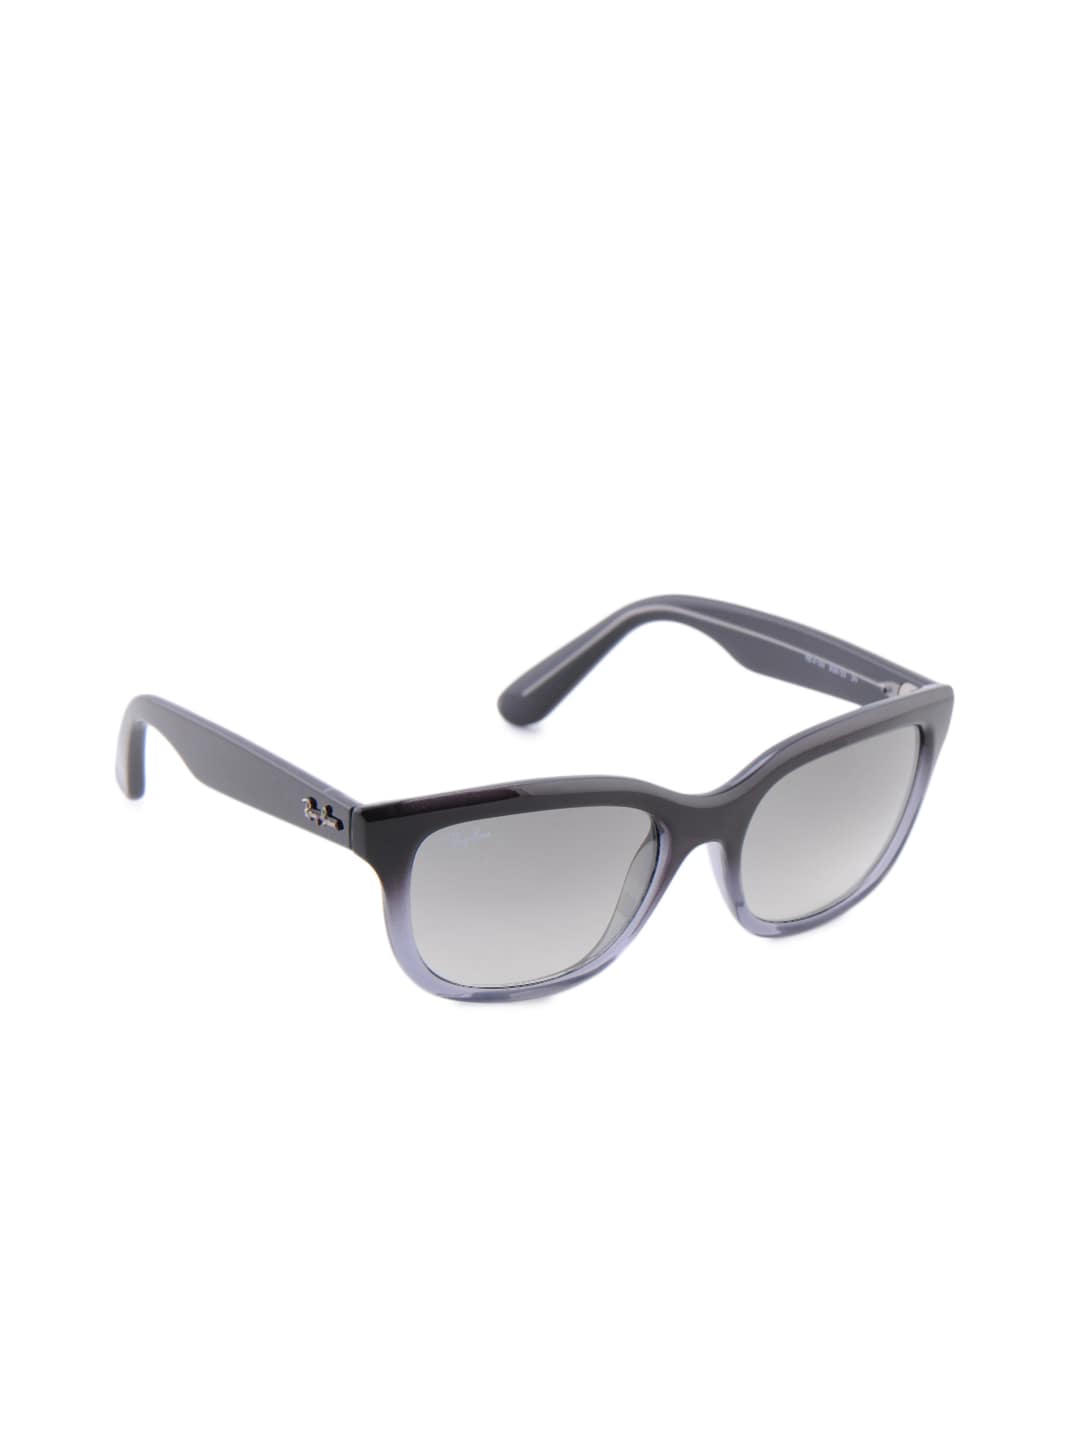 Rayban Unisex Black Highstreet Sunglasses